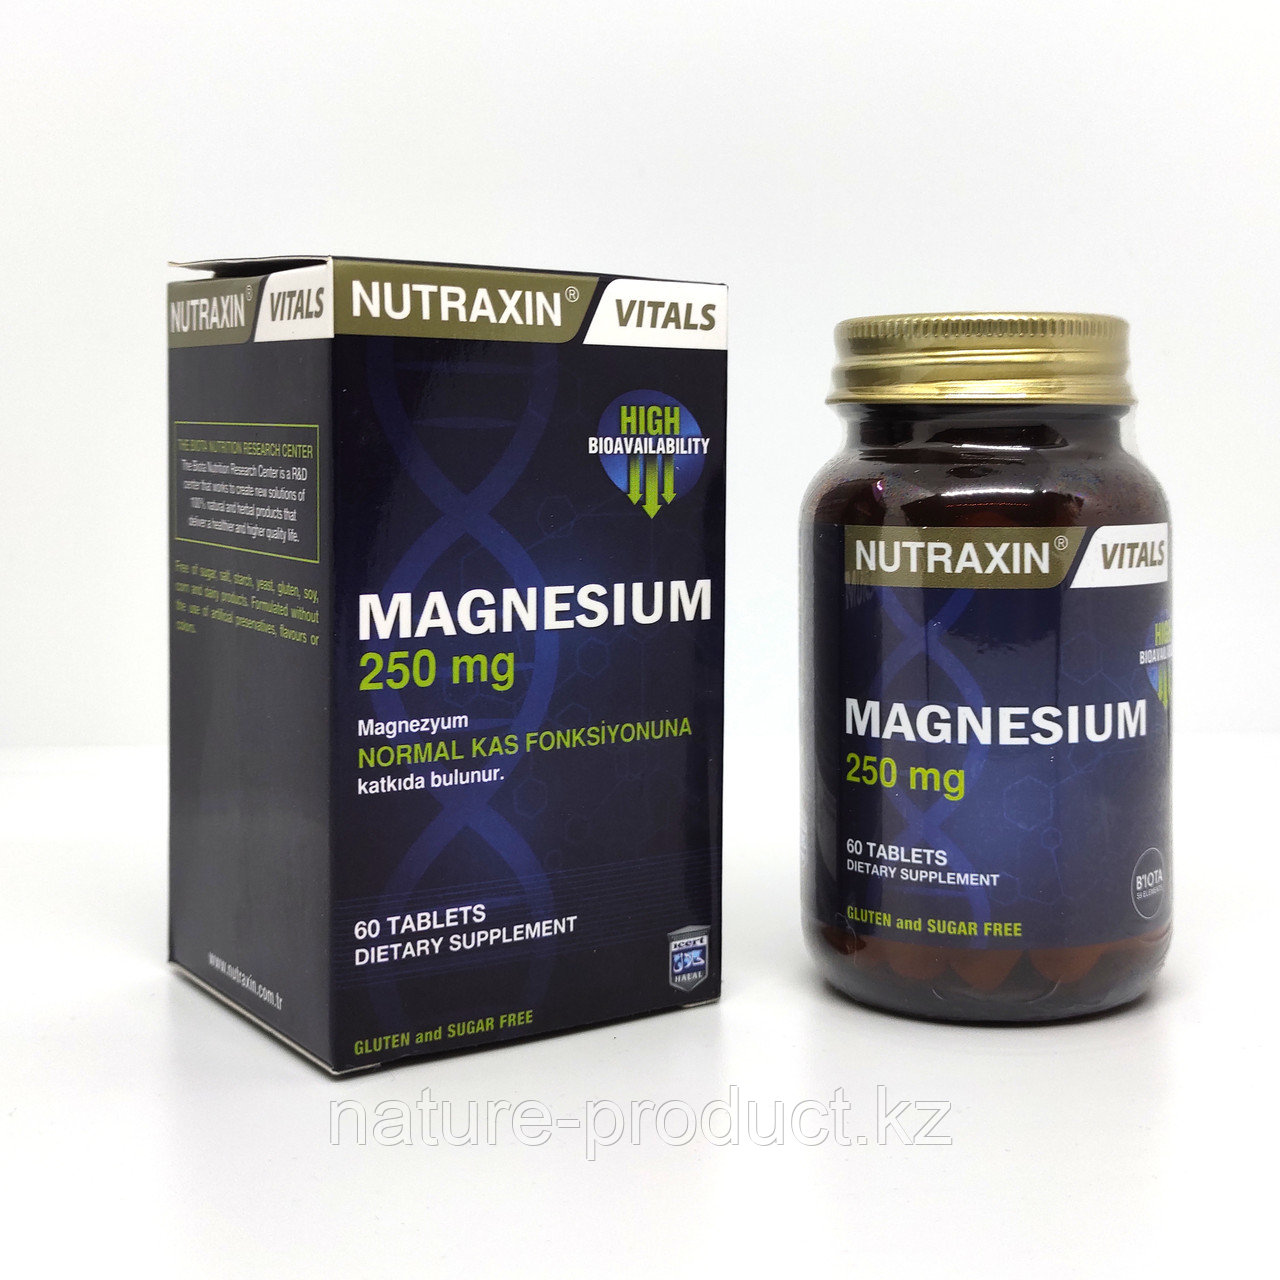 Магний (Magnesium) 250 mg Nutraxin 60 таблеток